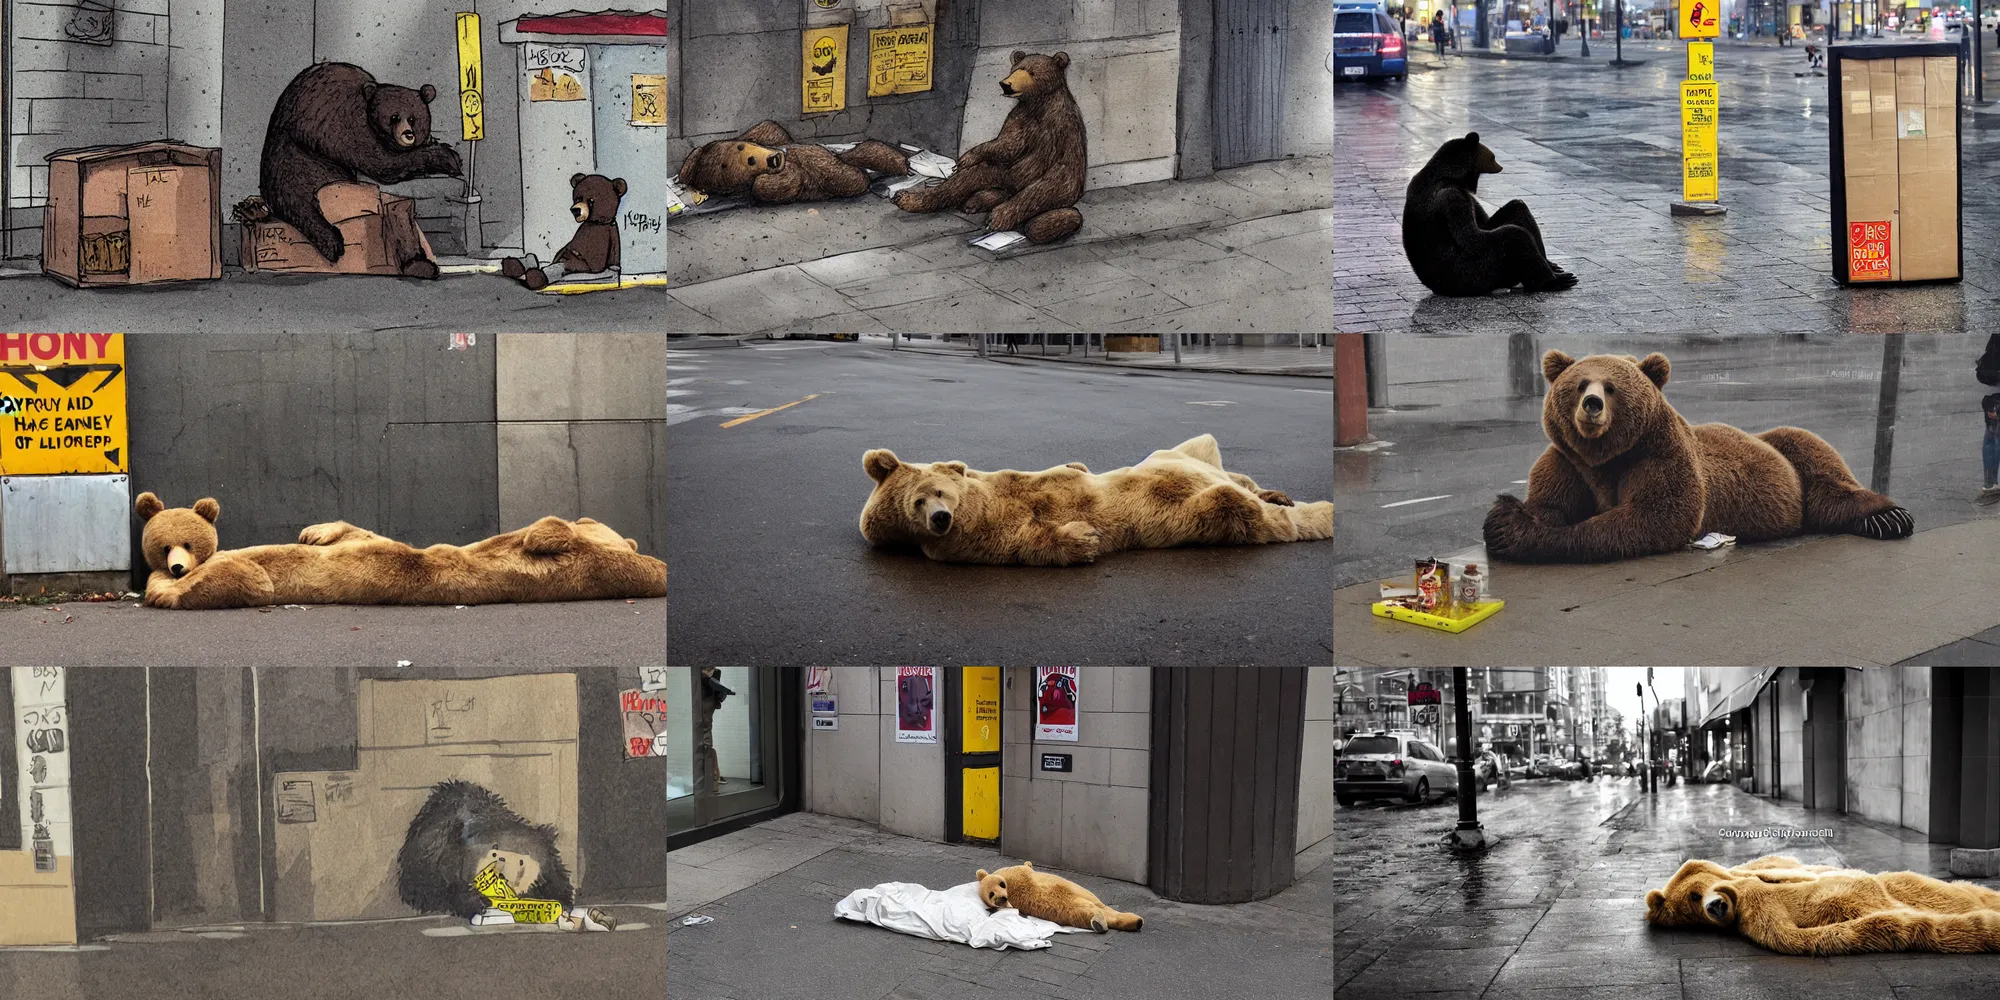 Image similar to hyper - realistic anthropomorphic bear homeless laying in a dark rainy street corner under carton boxes, honey dispensary